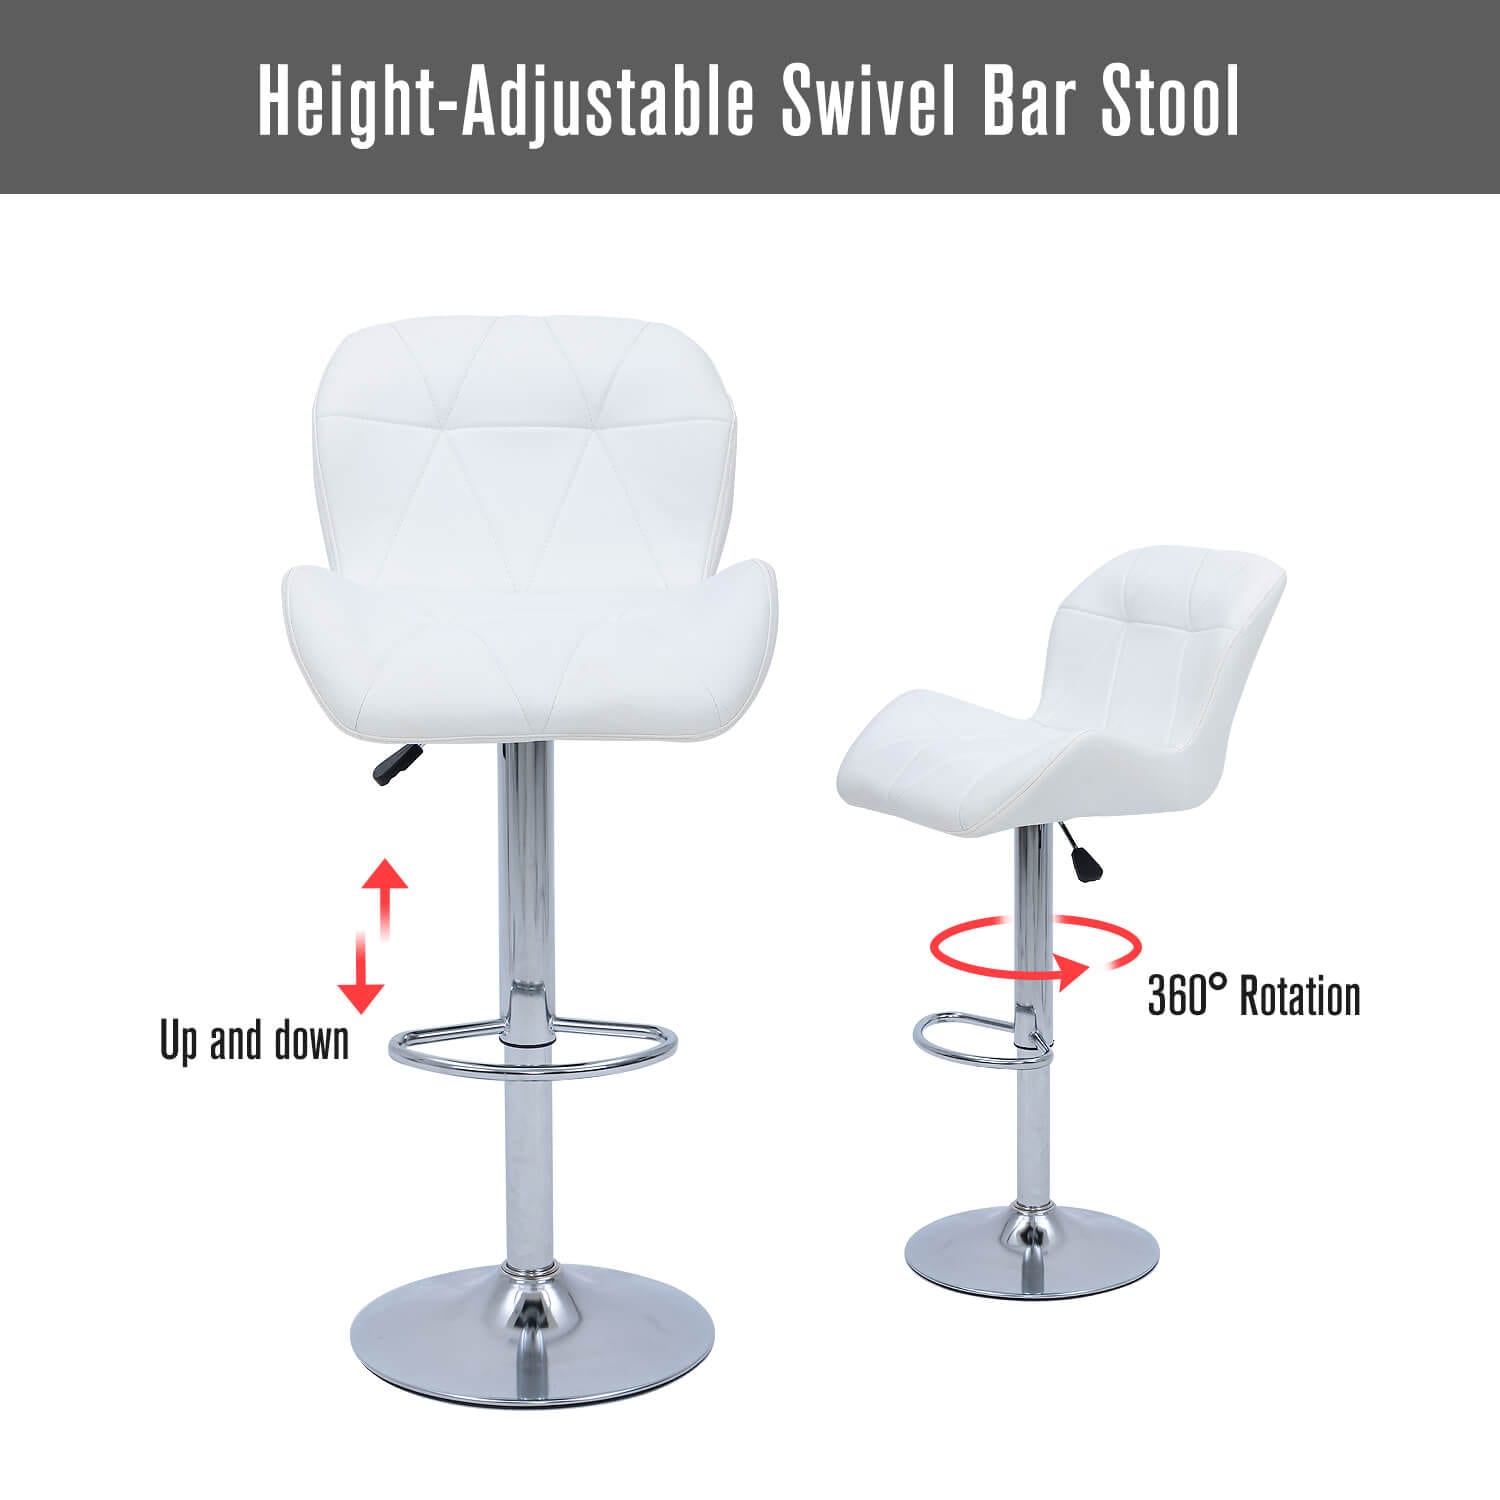 Elecwish Grid White Set of 2 Bar Stools OW010 is height-adjustable swivel bar stool